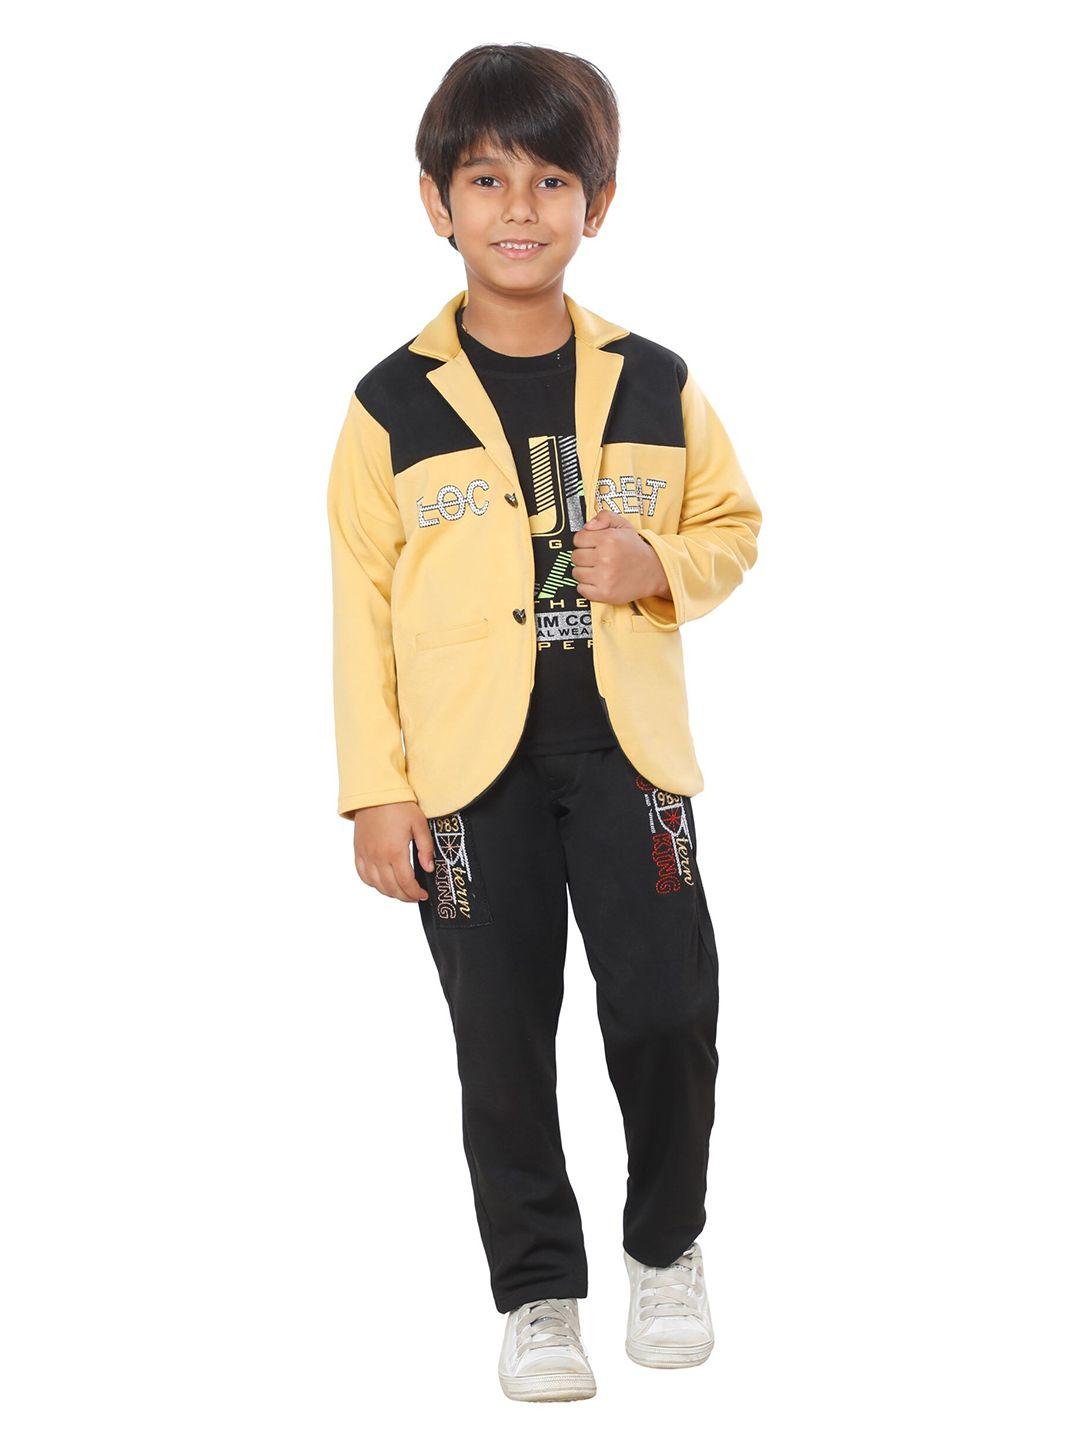 dkgf-fashion-boys-yellow-&-black-3-piece-clothing-set